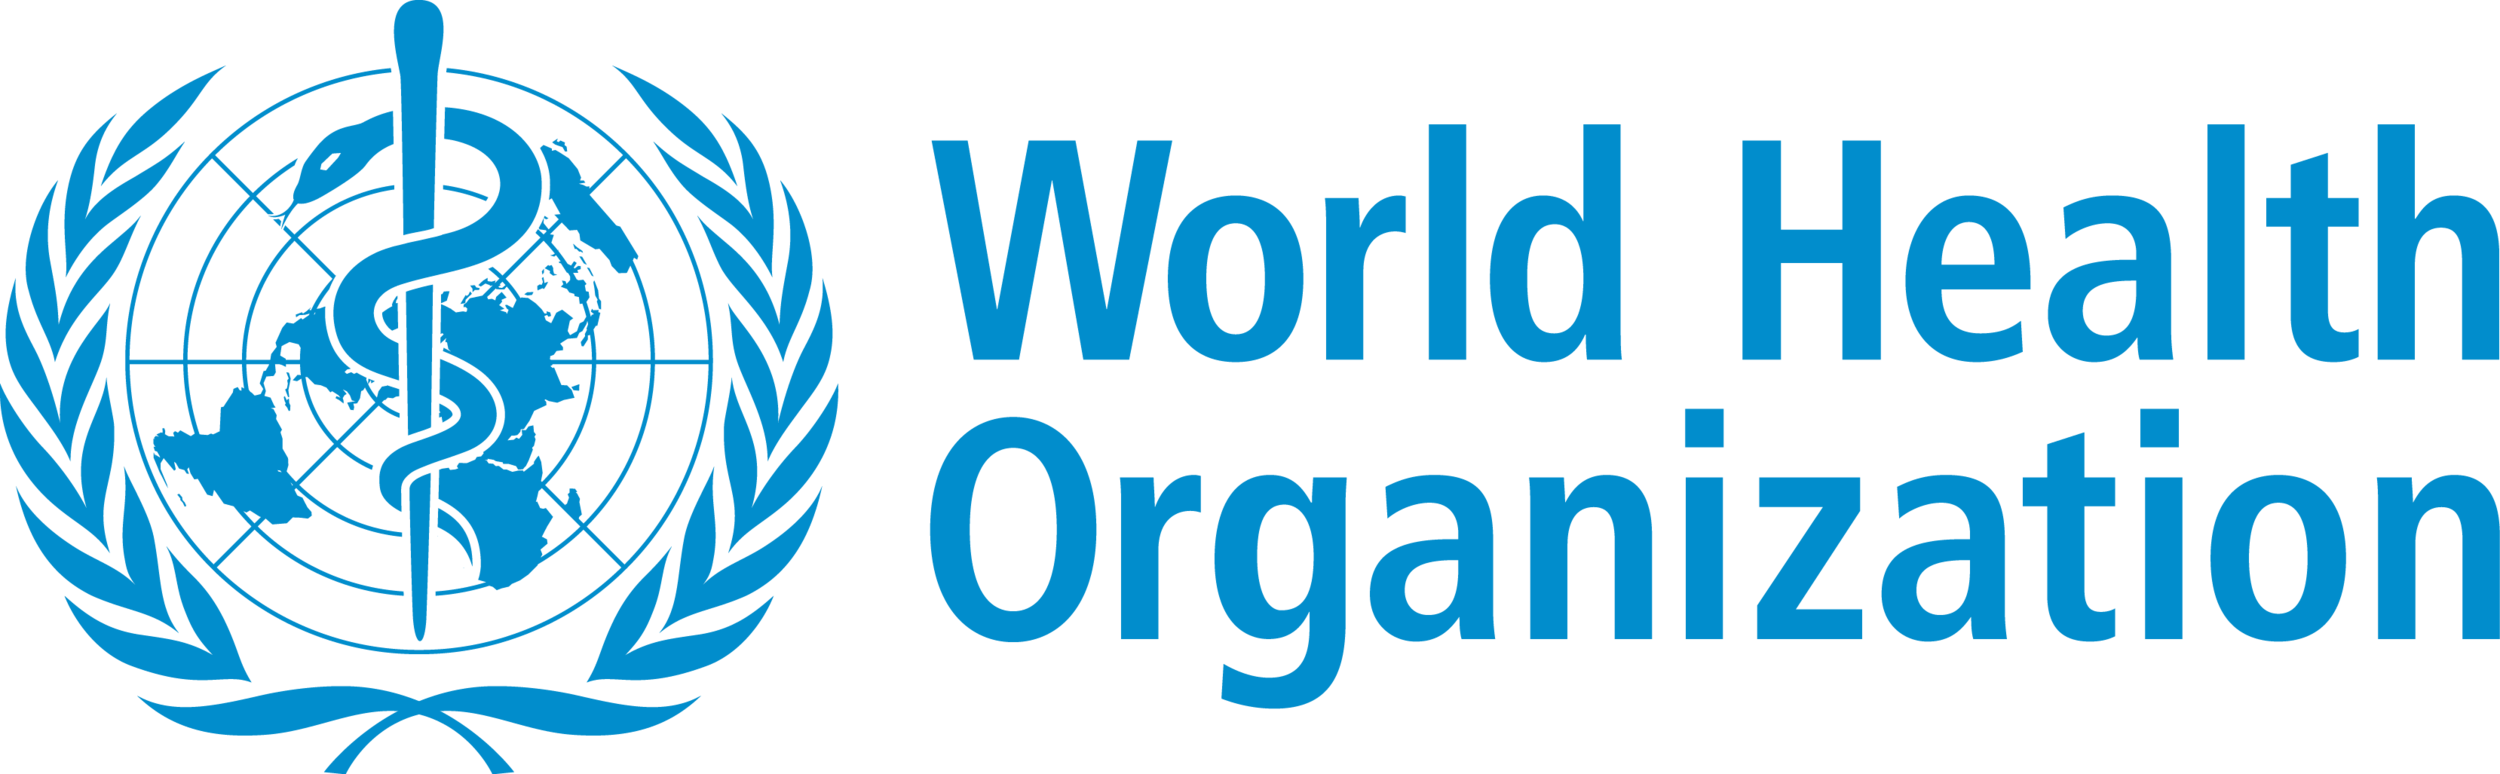 who-logo-world-health-organization-logo.png